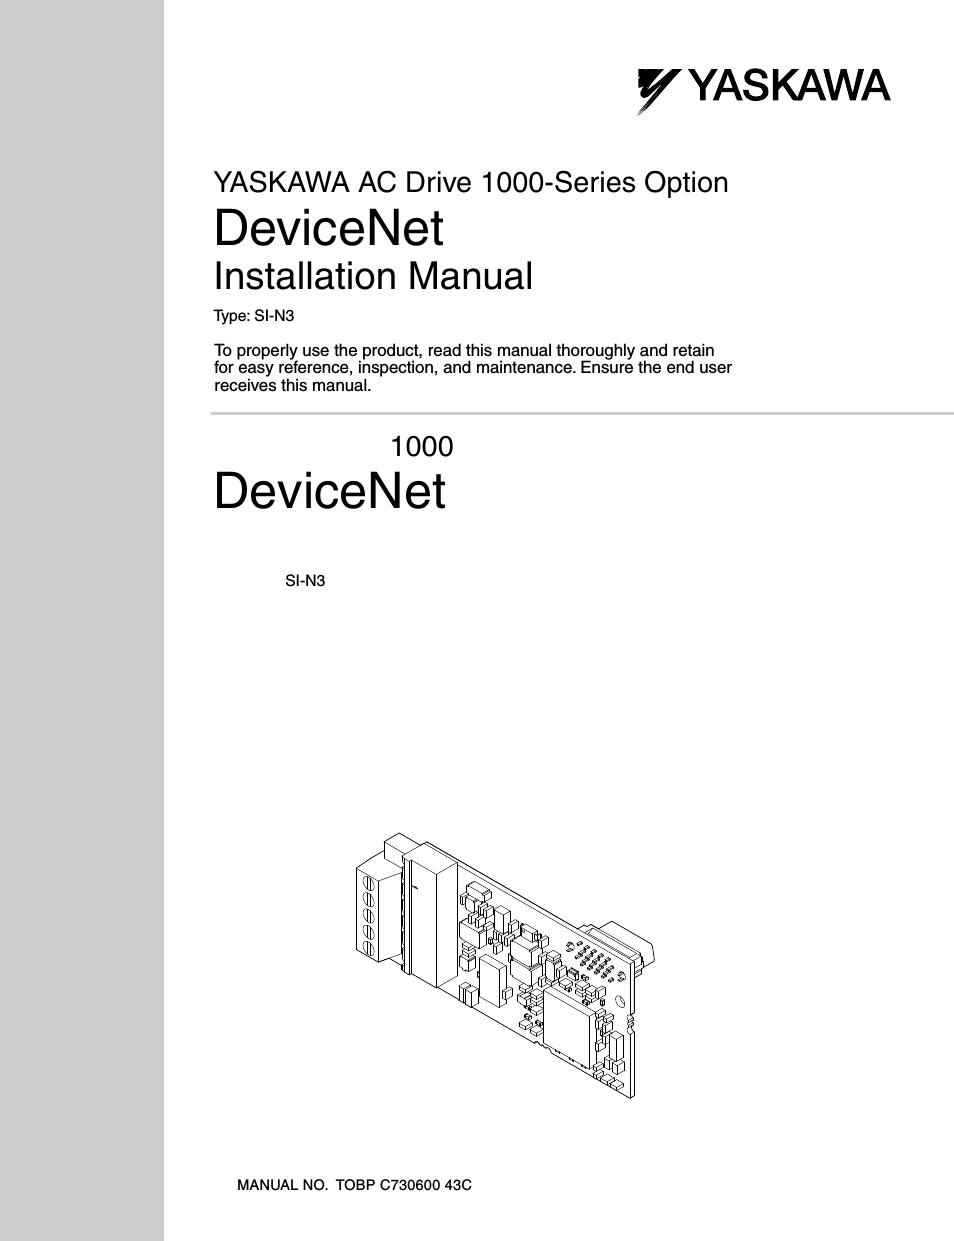 1000 Series Drive Option - DeviceNet Installation